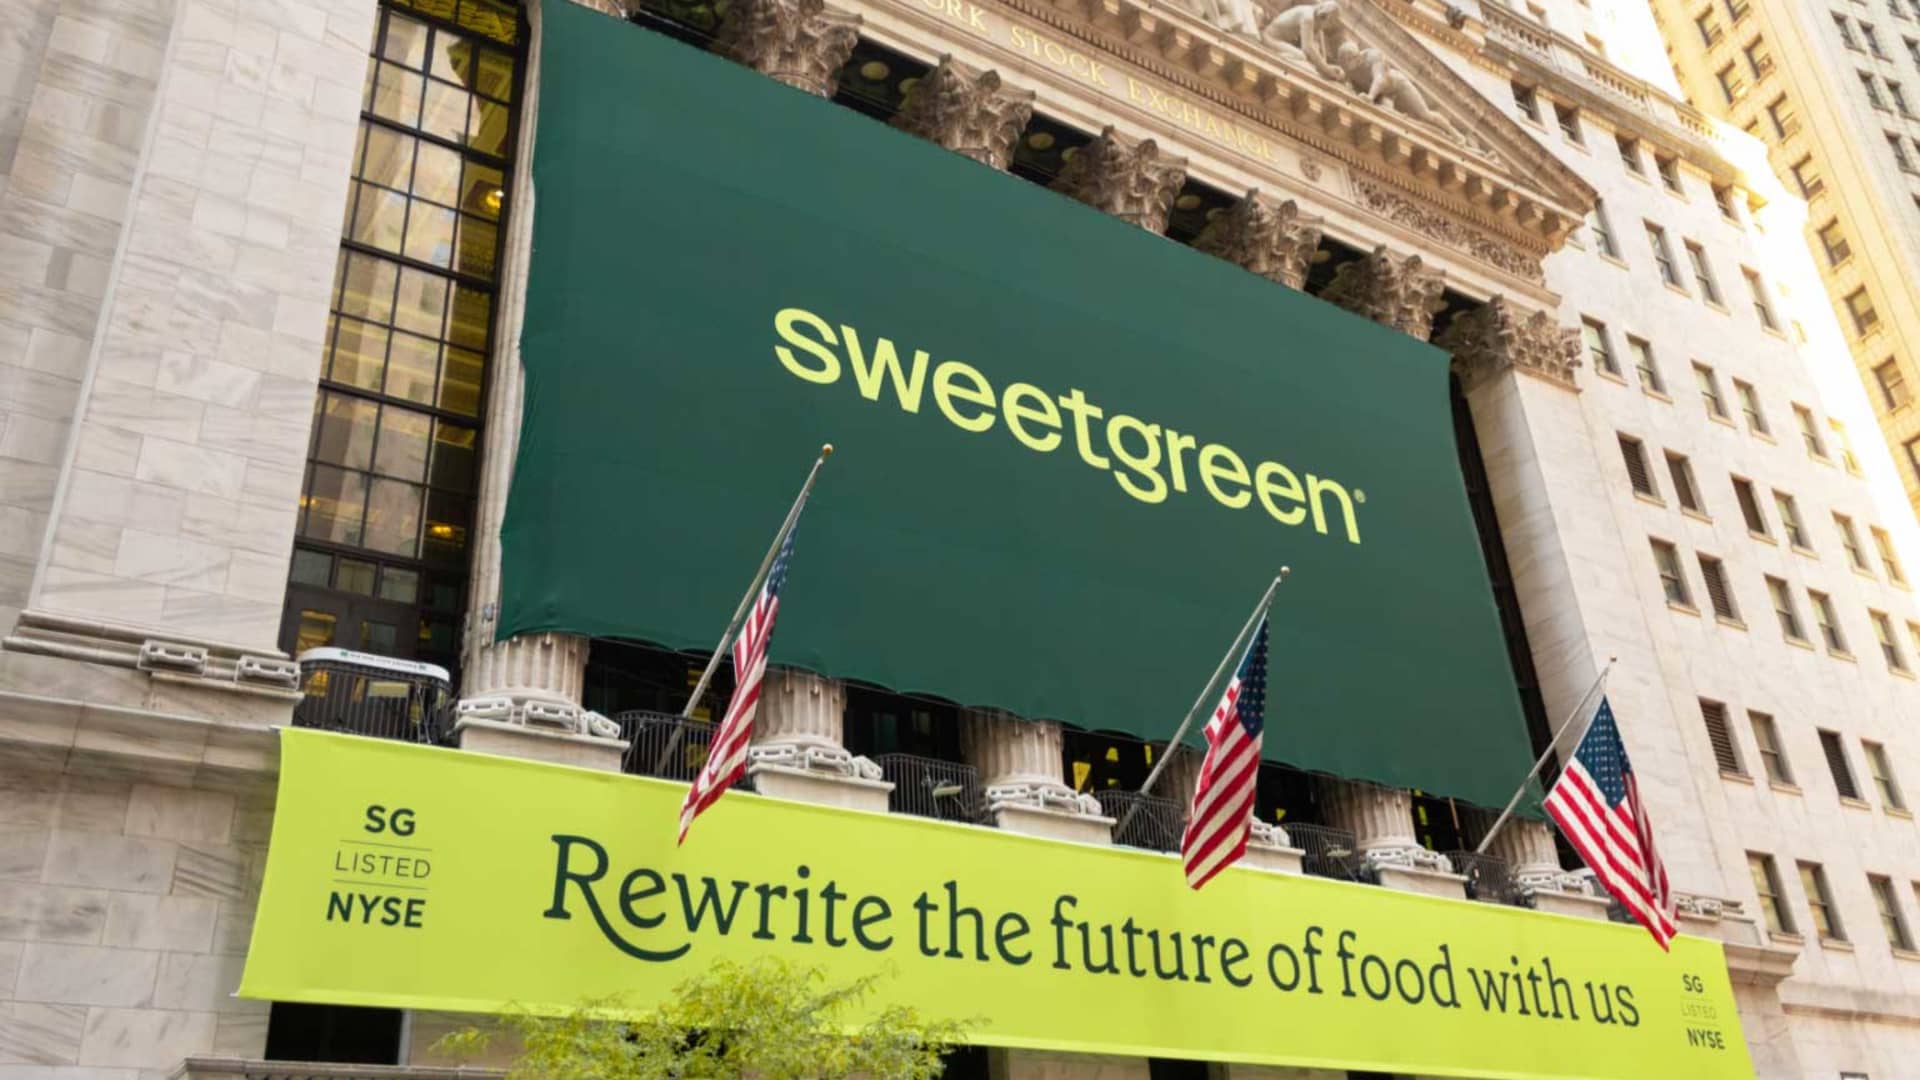 Sweetgreen (SG) Q1 2022 earnings